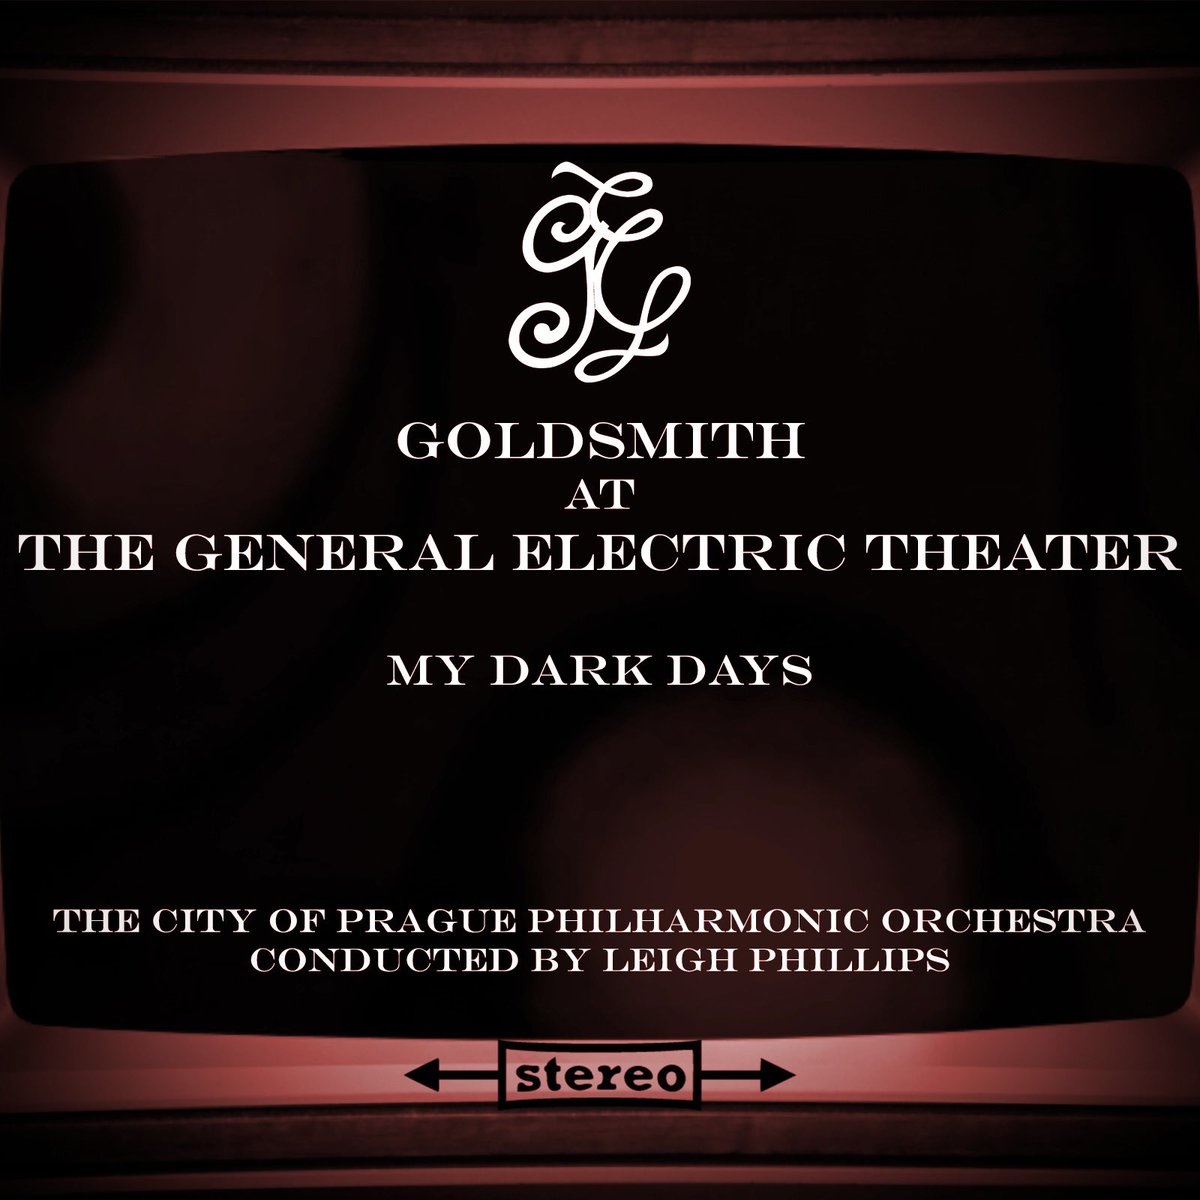 More Goldsmith TV scores, now available for streaming:

open.spotify.com/album/3oqgylQ6…

open.spotify.com/album/1S7Xq98z…

#filmmusic #soundtracks #jerrygoldsmith #prague #composers #orchestration #recording #tvmusic #Repost